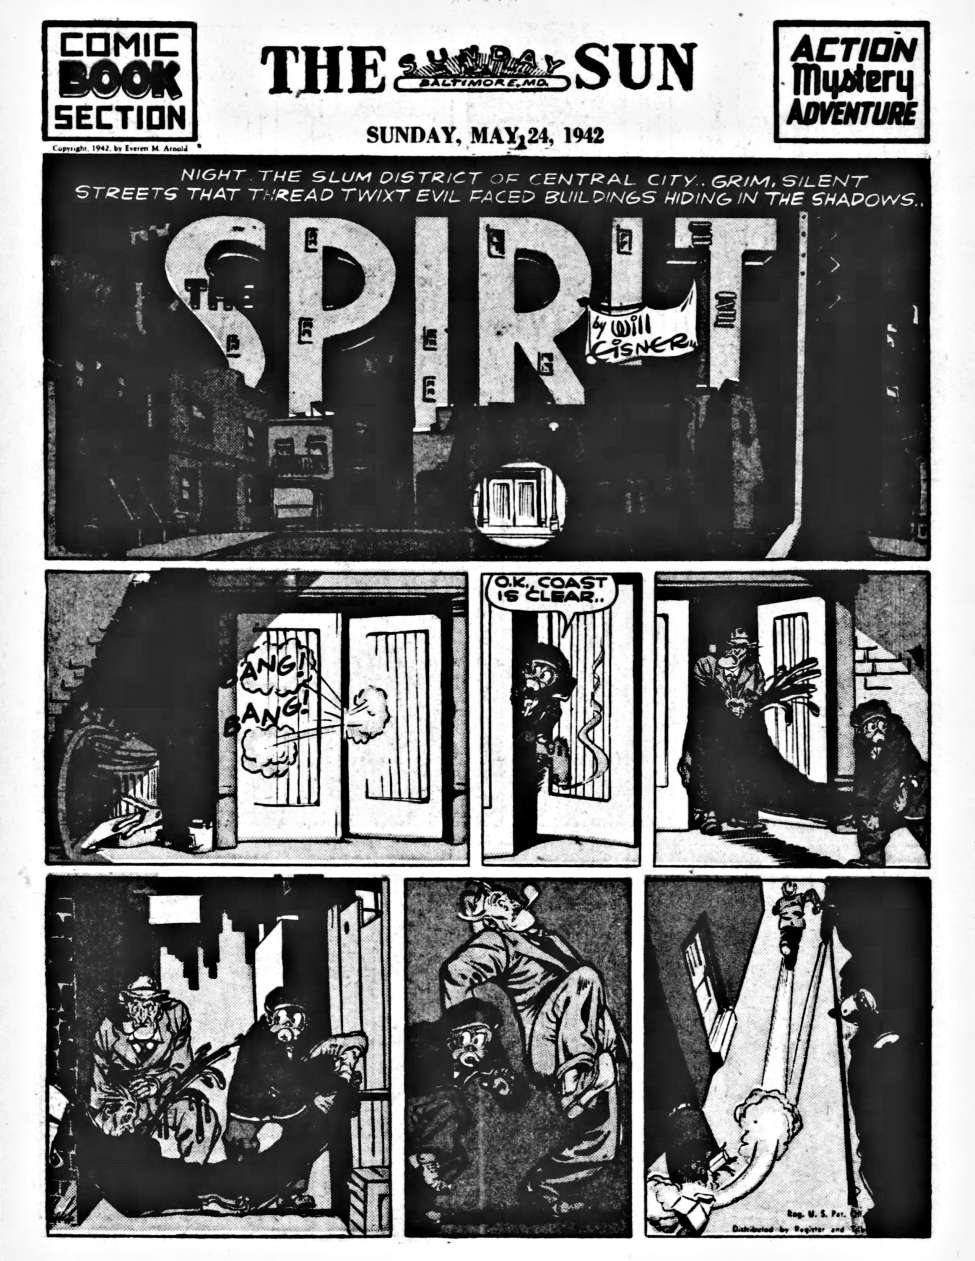 Comic Book Cover For The Spirit (1942-05-24) - Baltimore Sun (b/w)